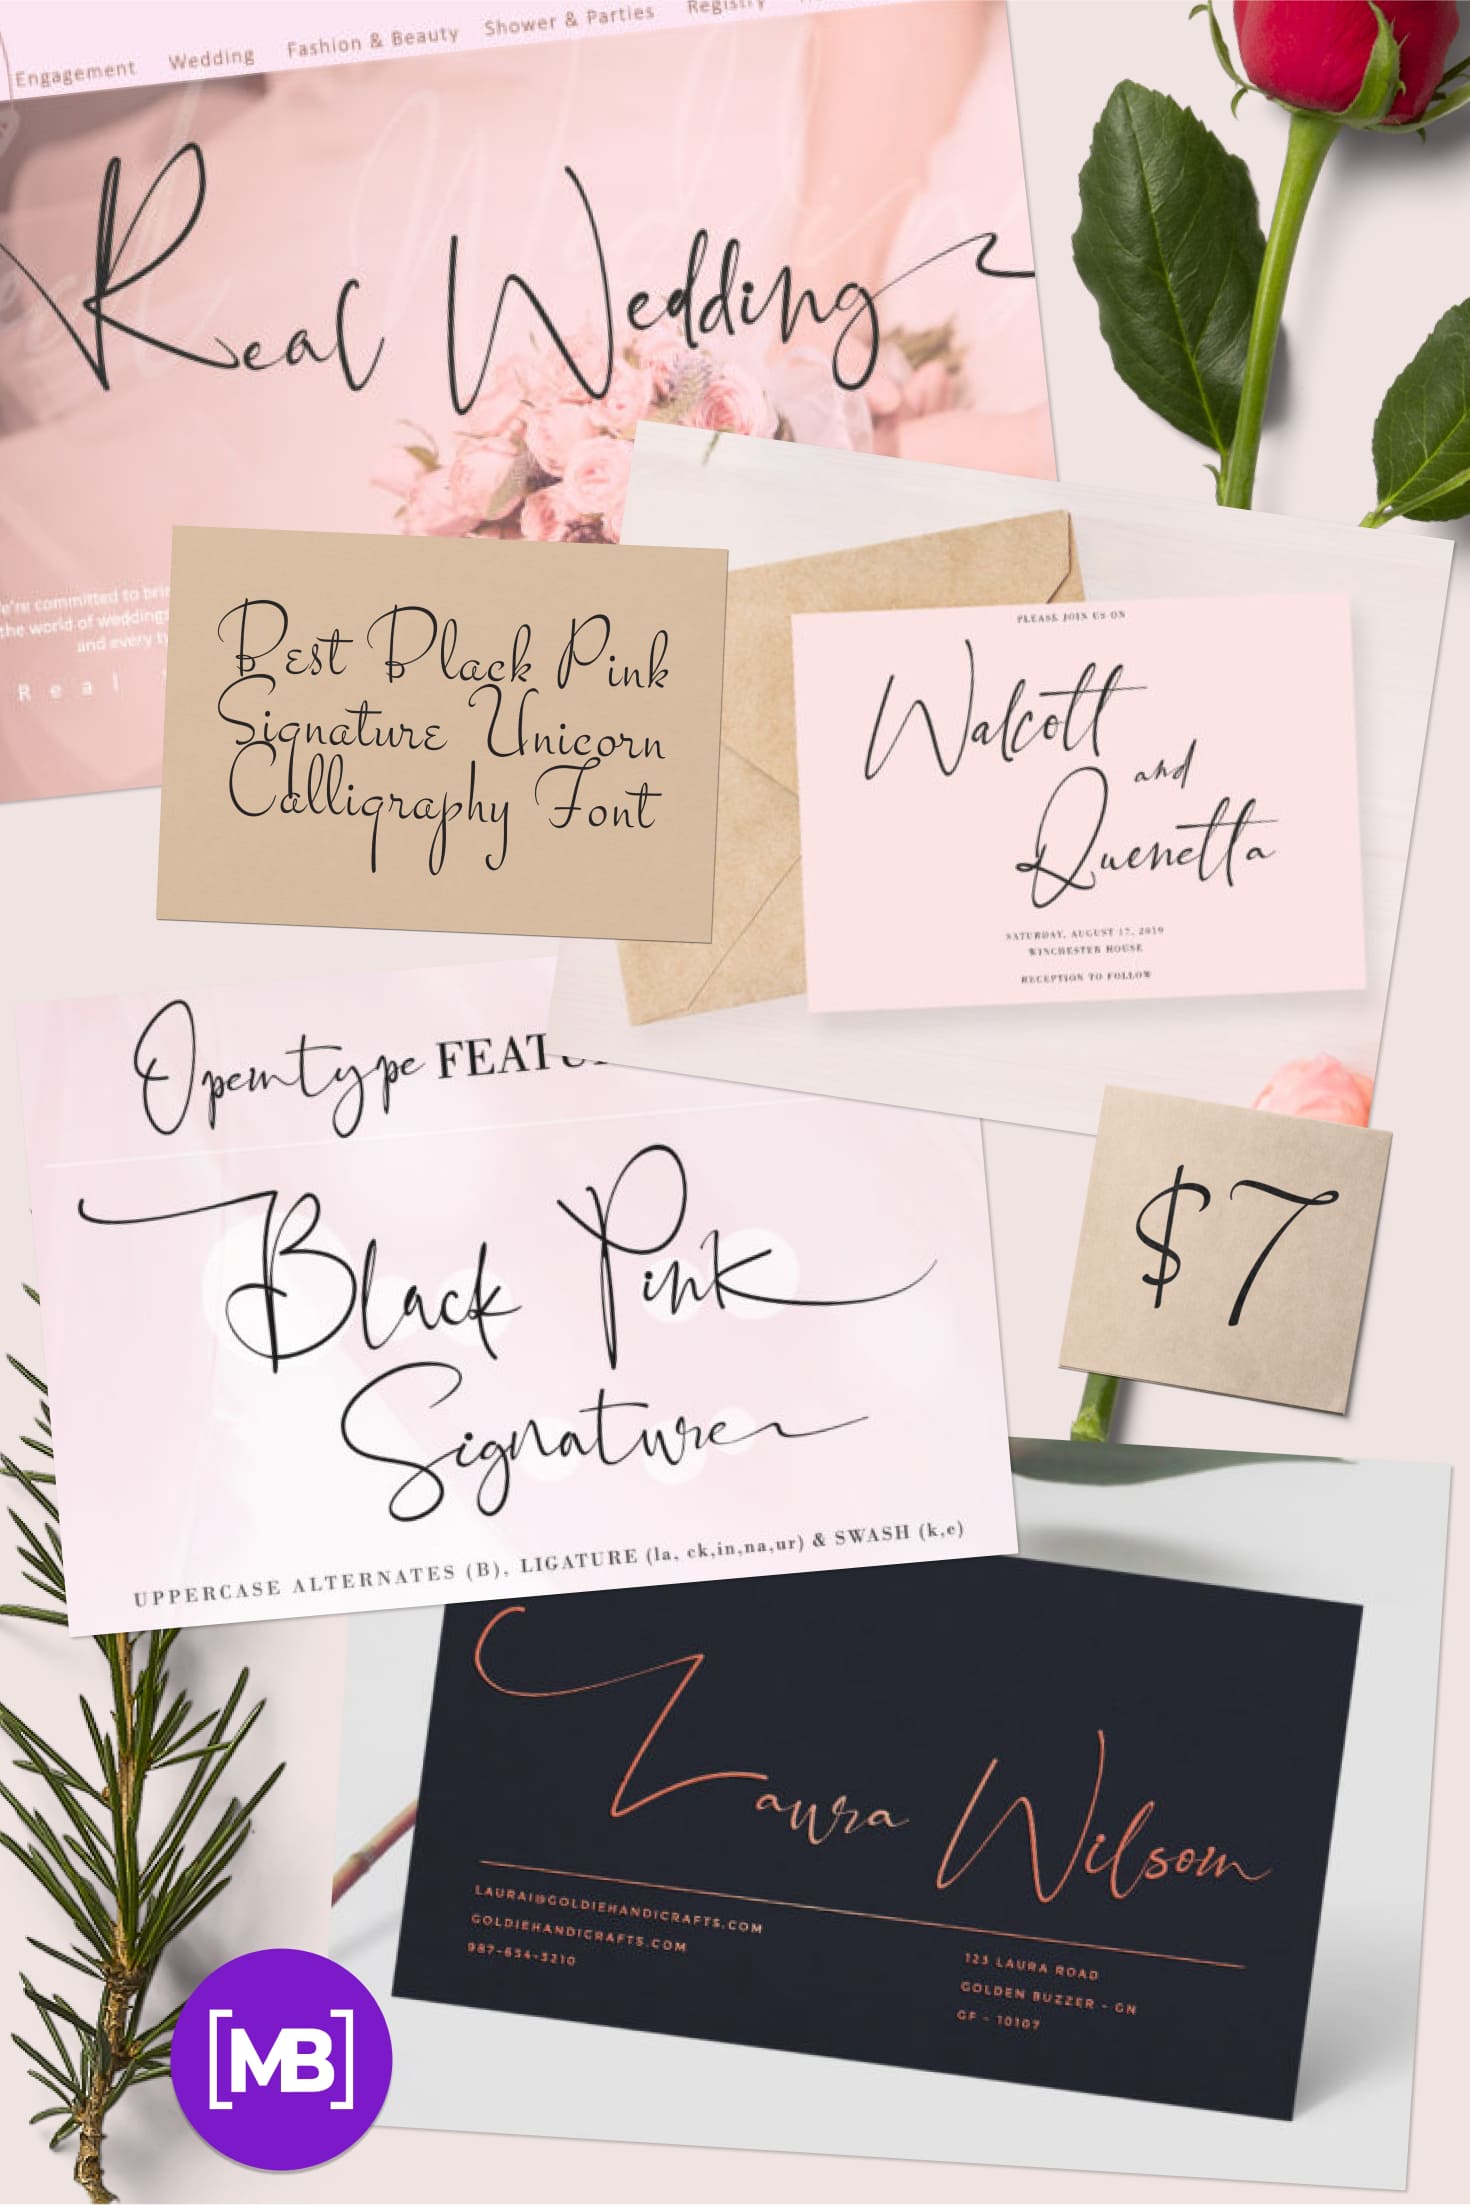 Pinterest Image: Best Black Pink Signature Unicorn Calligraphy Font 2020.